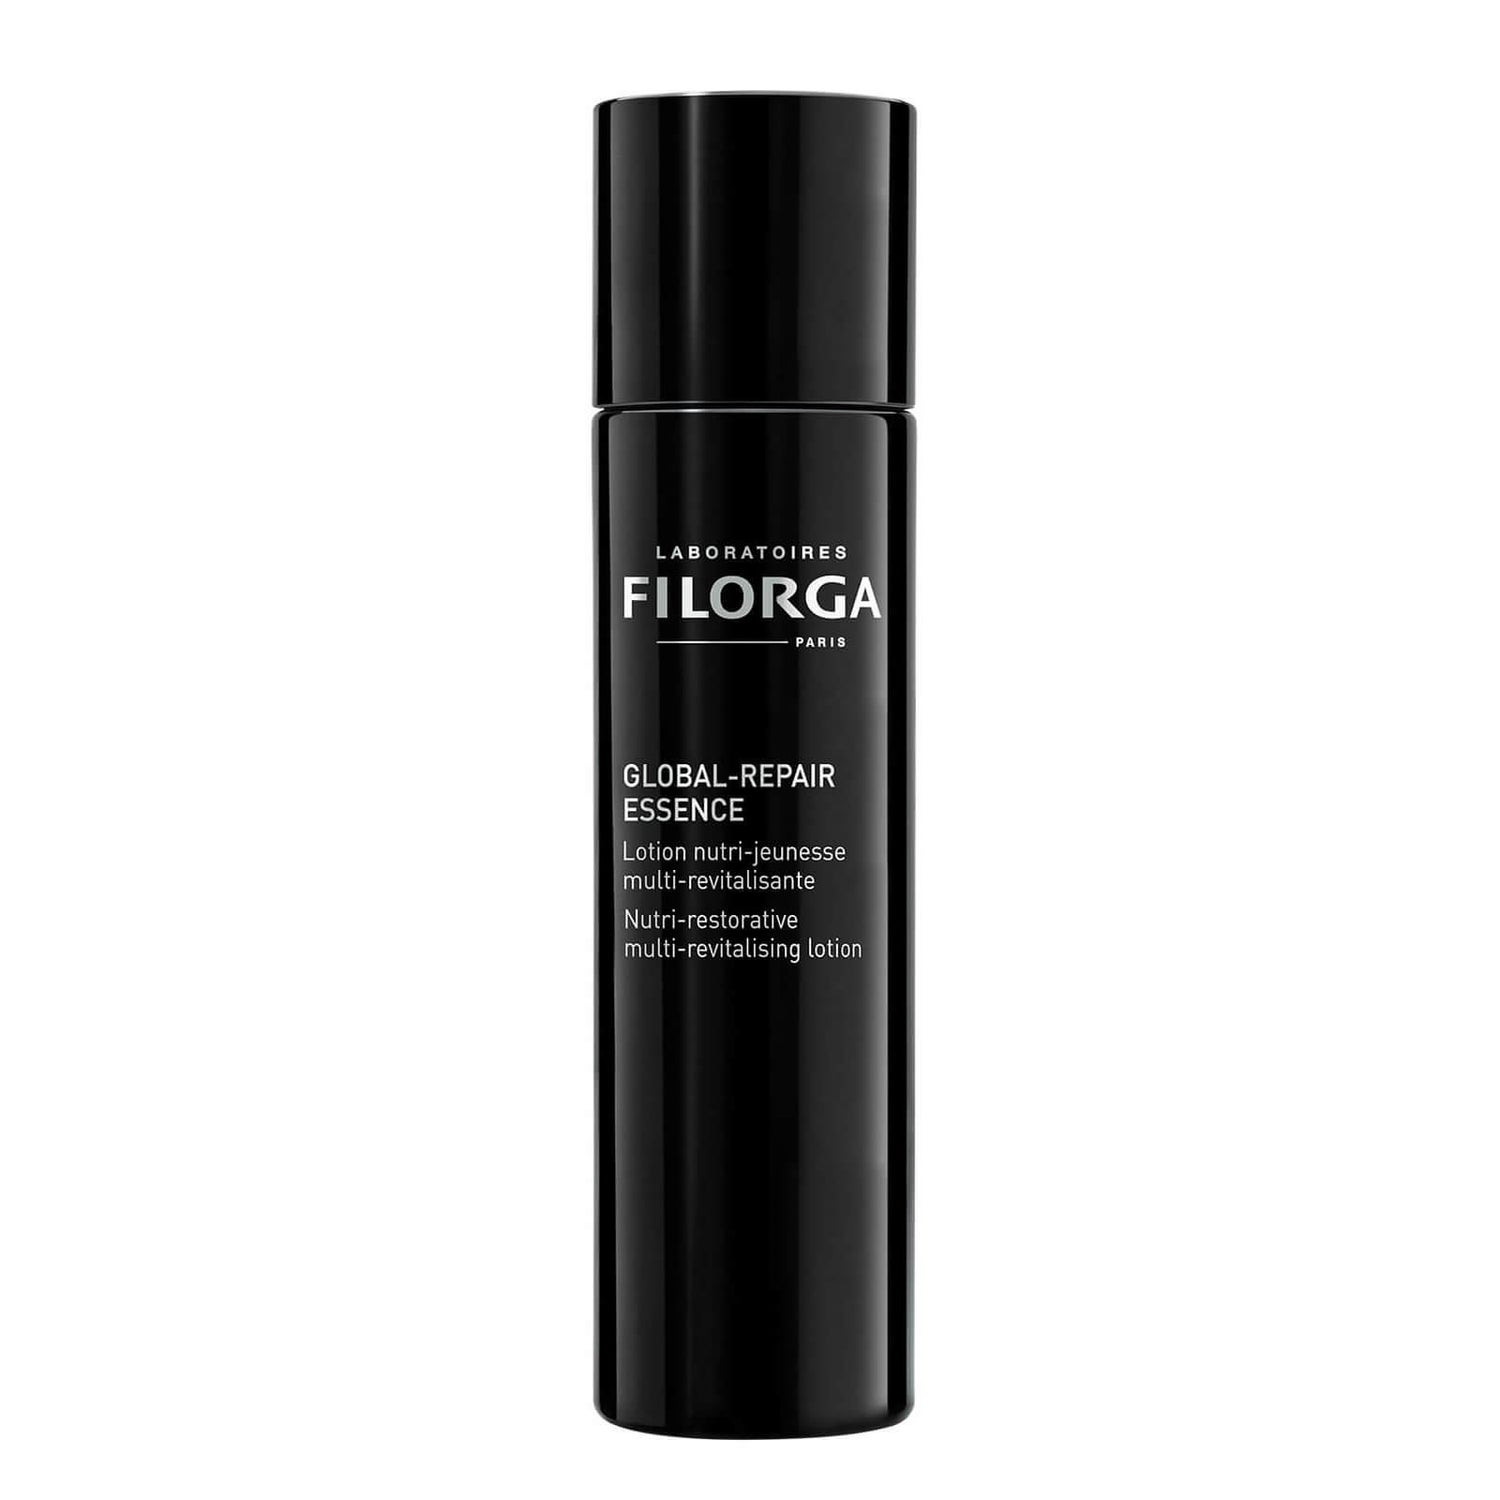 Filorga Global-Repair Essence Daily Face Lotion 150ml